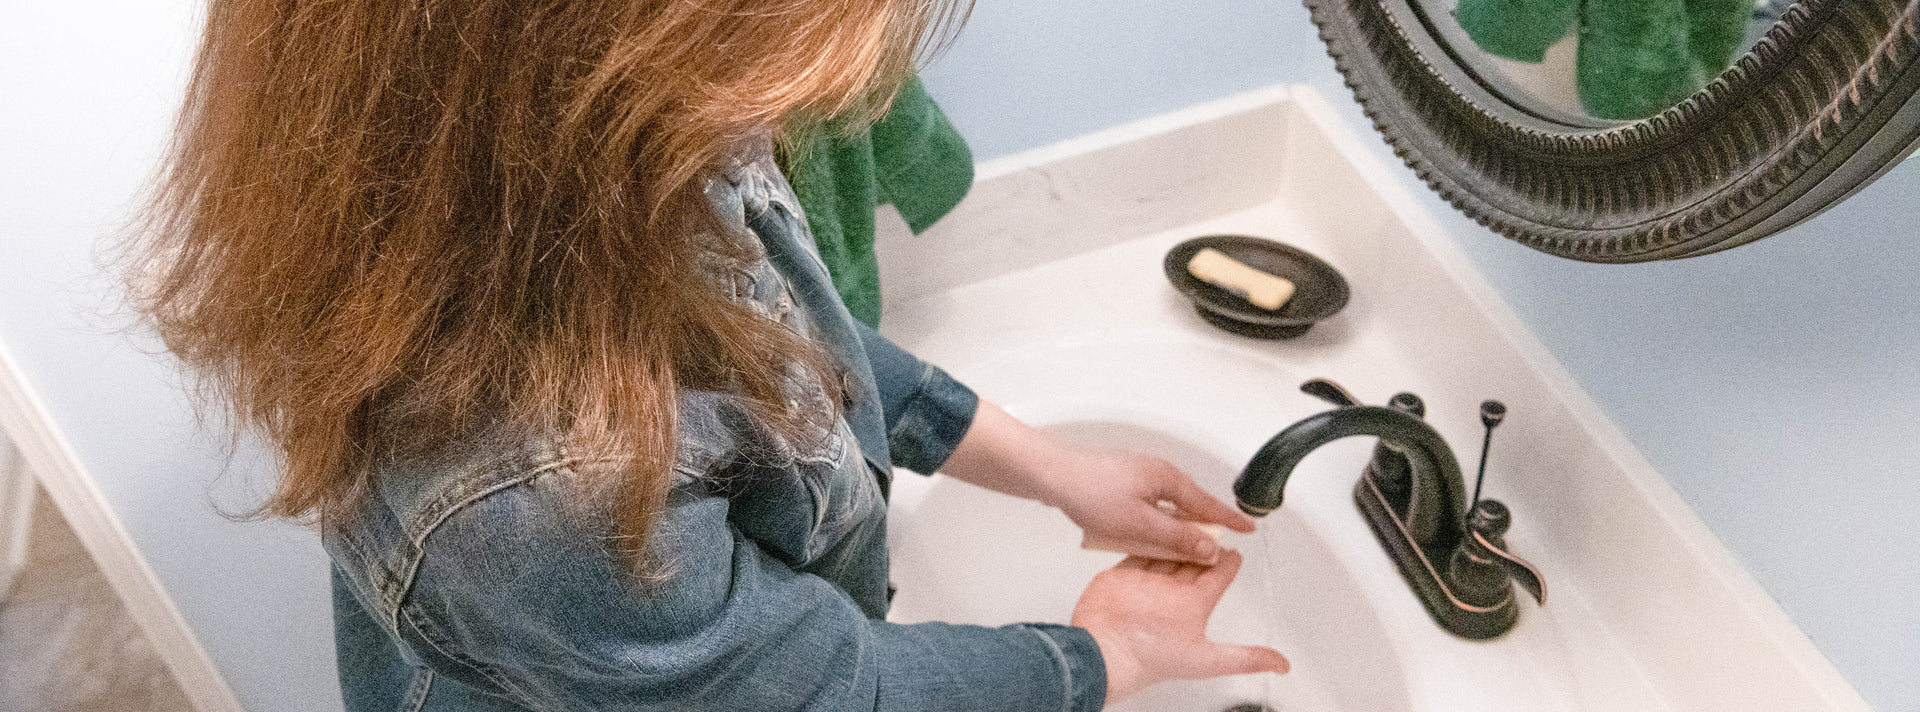 Handwashing: The Key To Having A Healthy Holiday Season